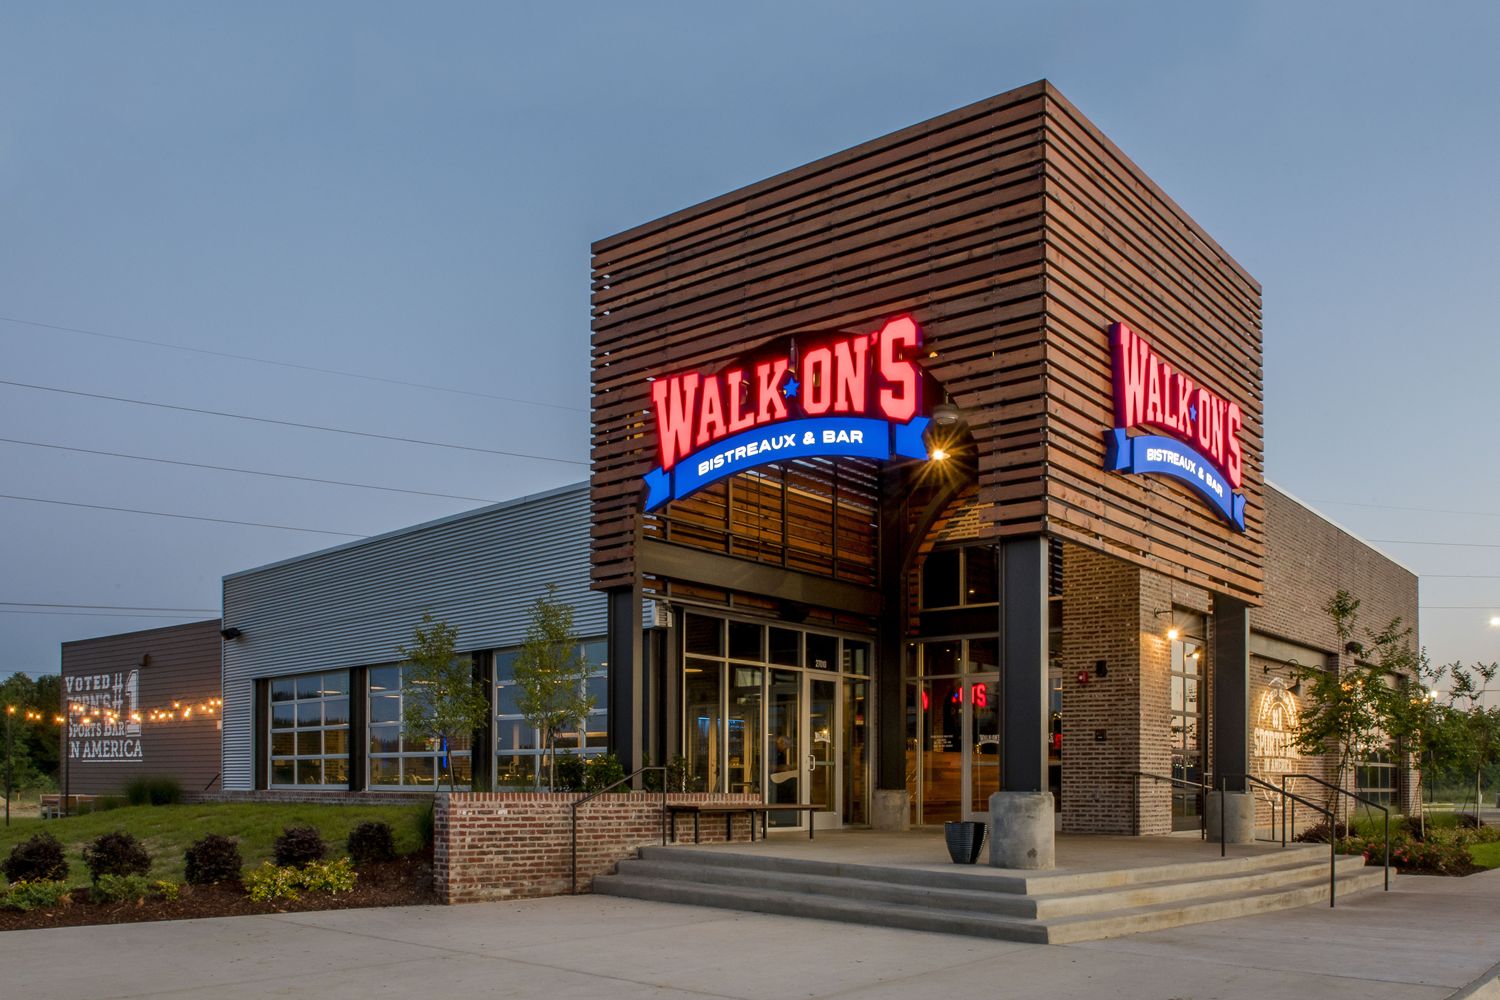 Walk-Ons Bistreaux & Bar Chooses xtraCHEF for Restaurant Invoice Management